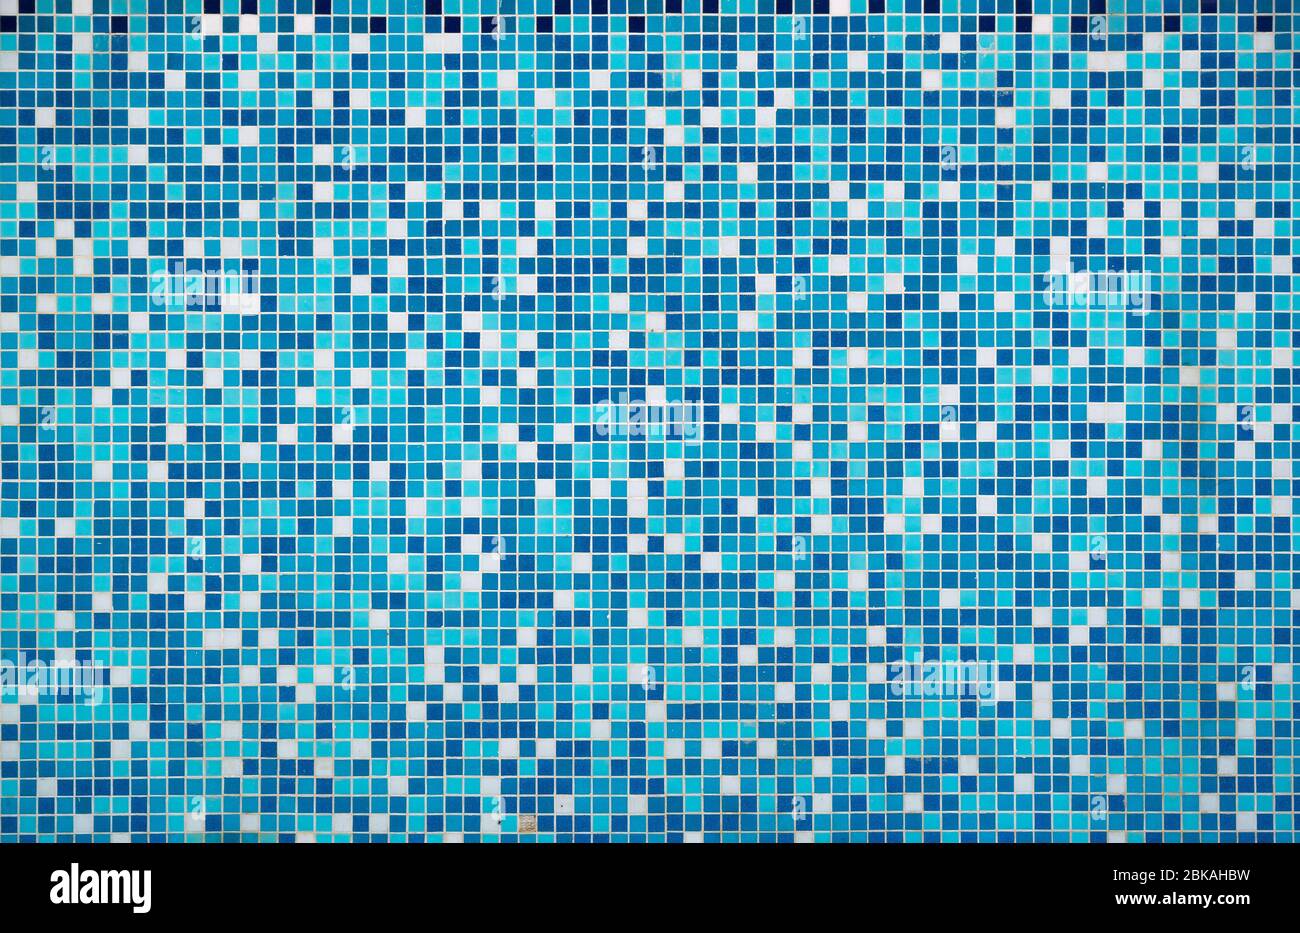 Pool Tiles Texture